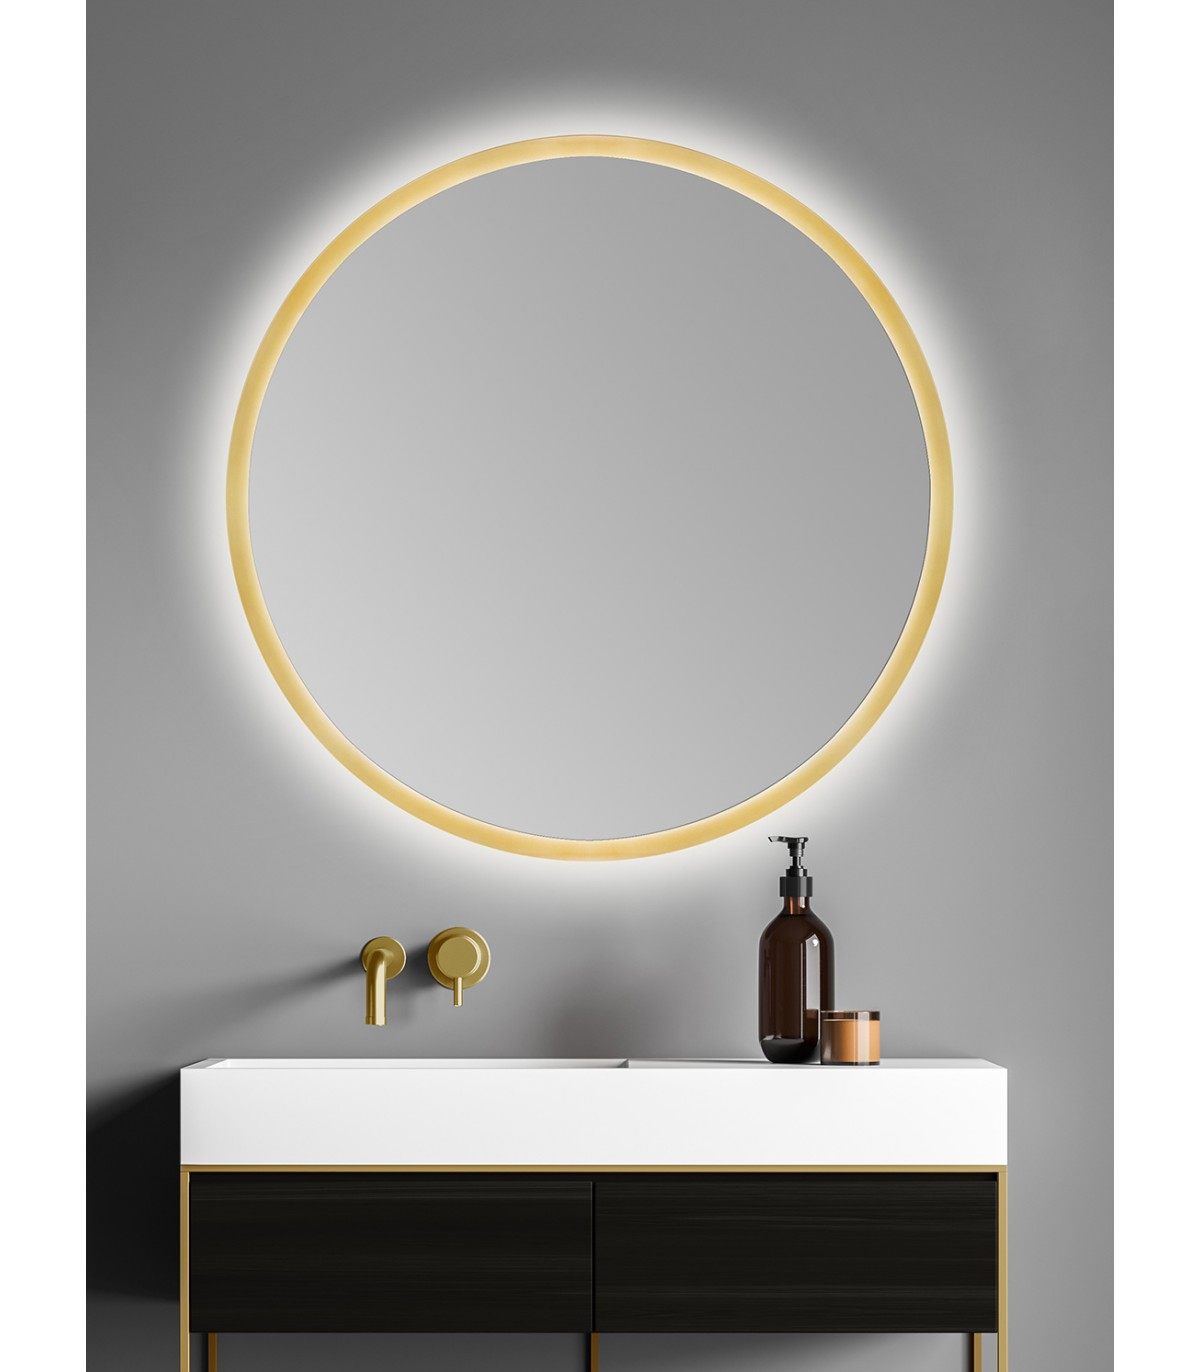 Espejo con luz led baño retroiluminado redondo